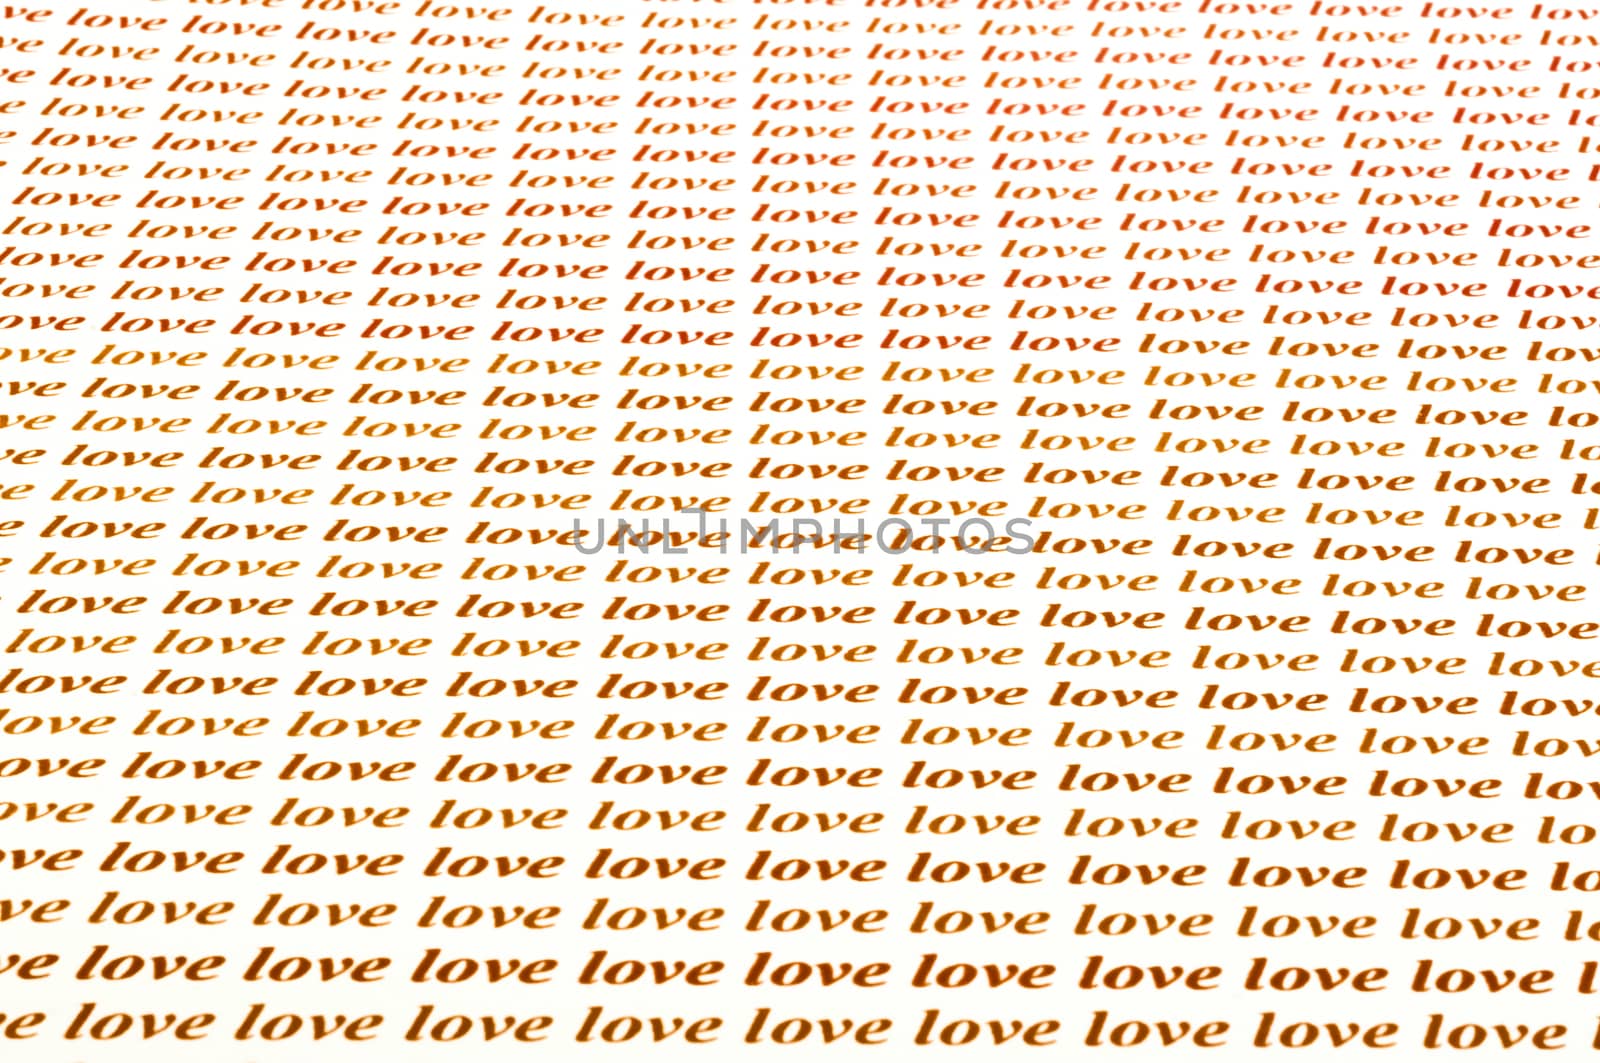 love love love by fcarniani